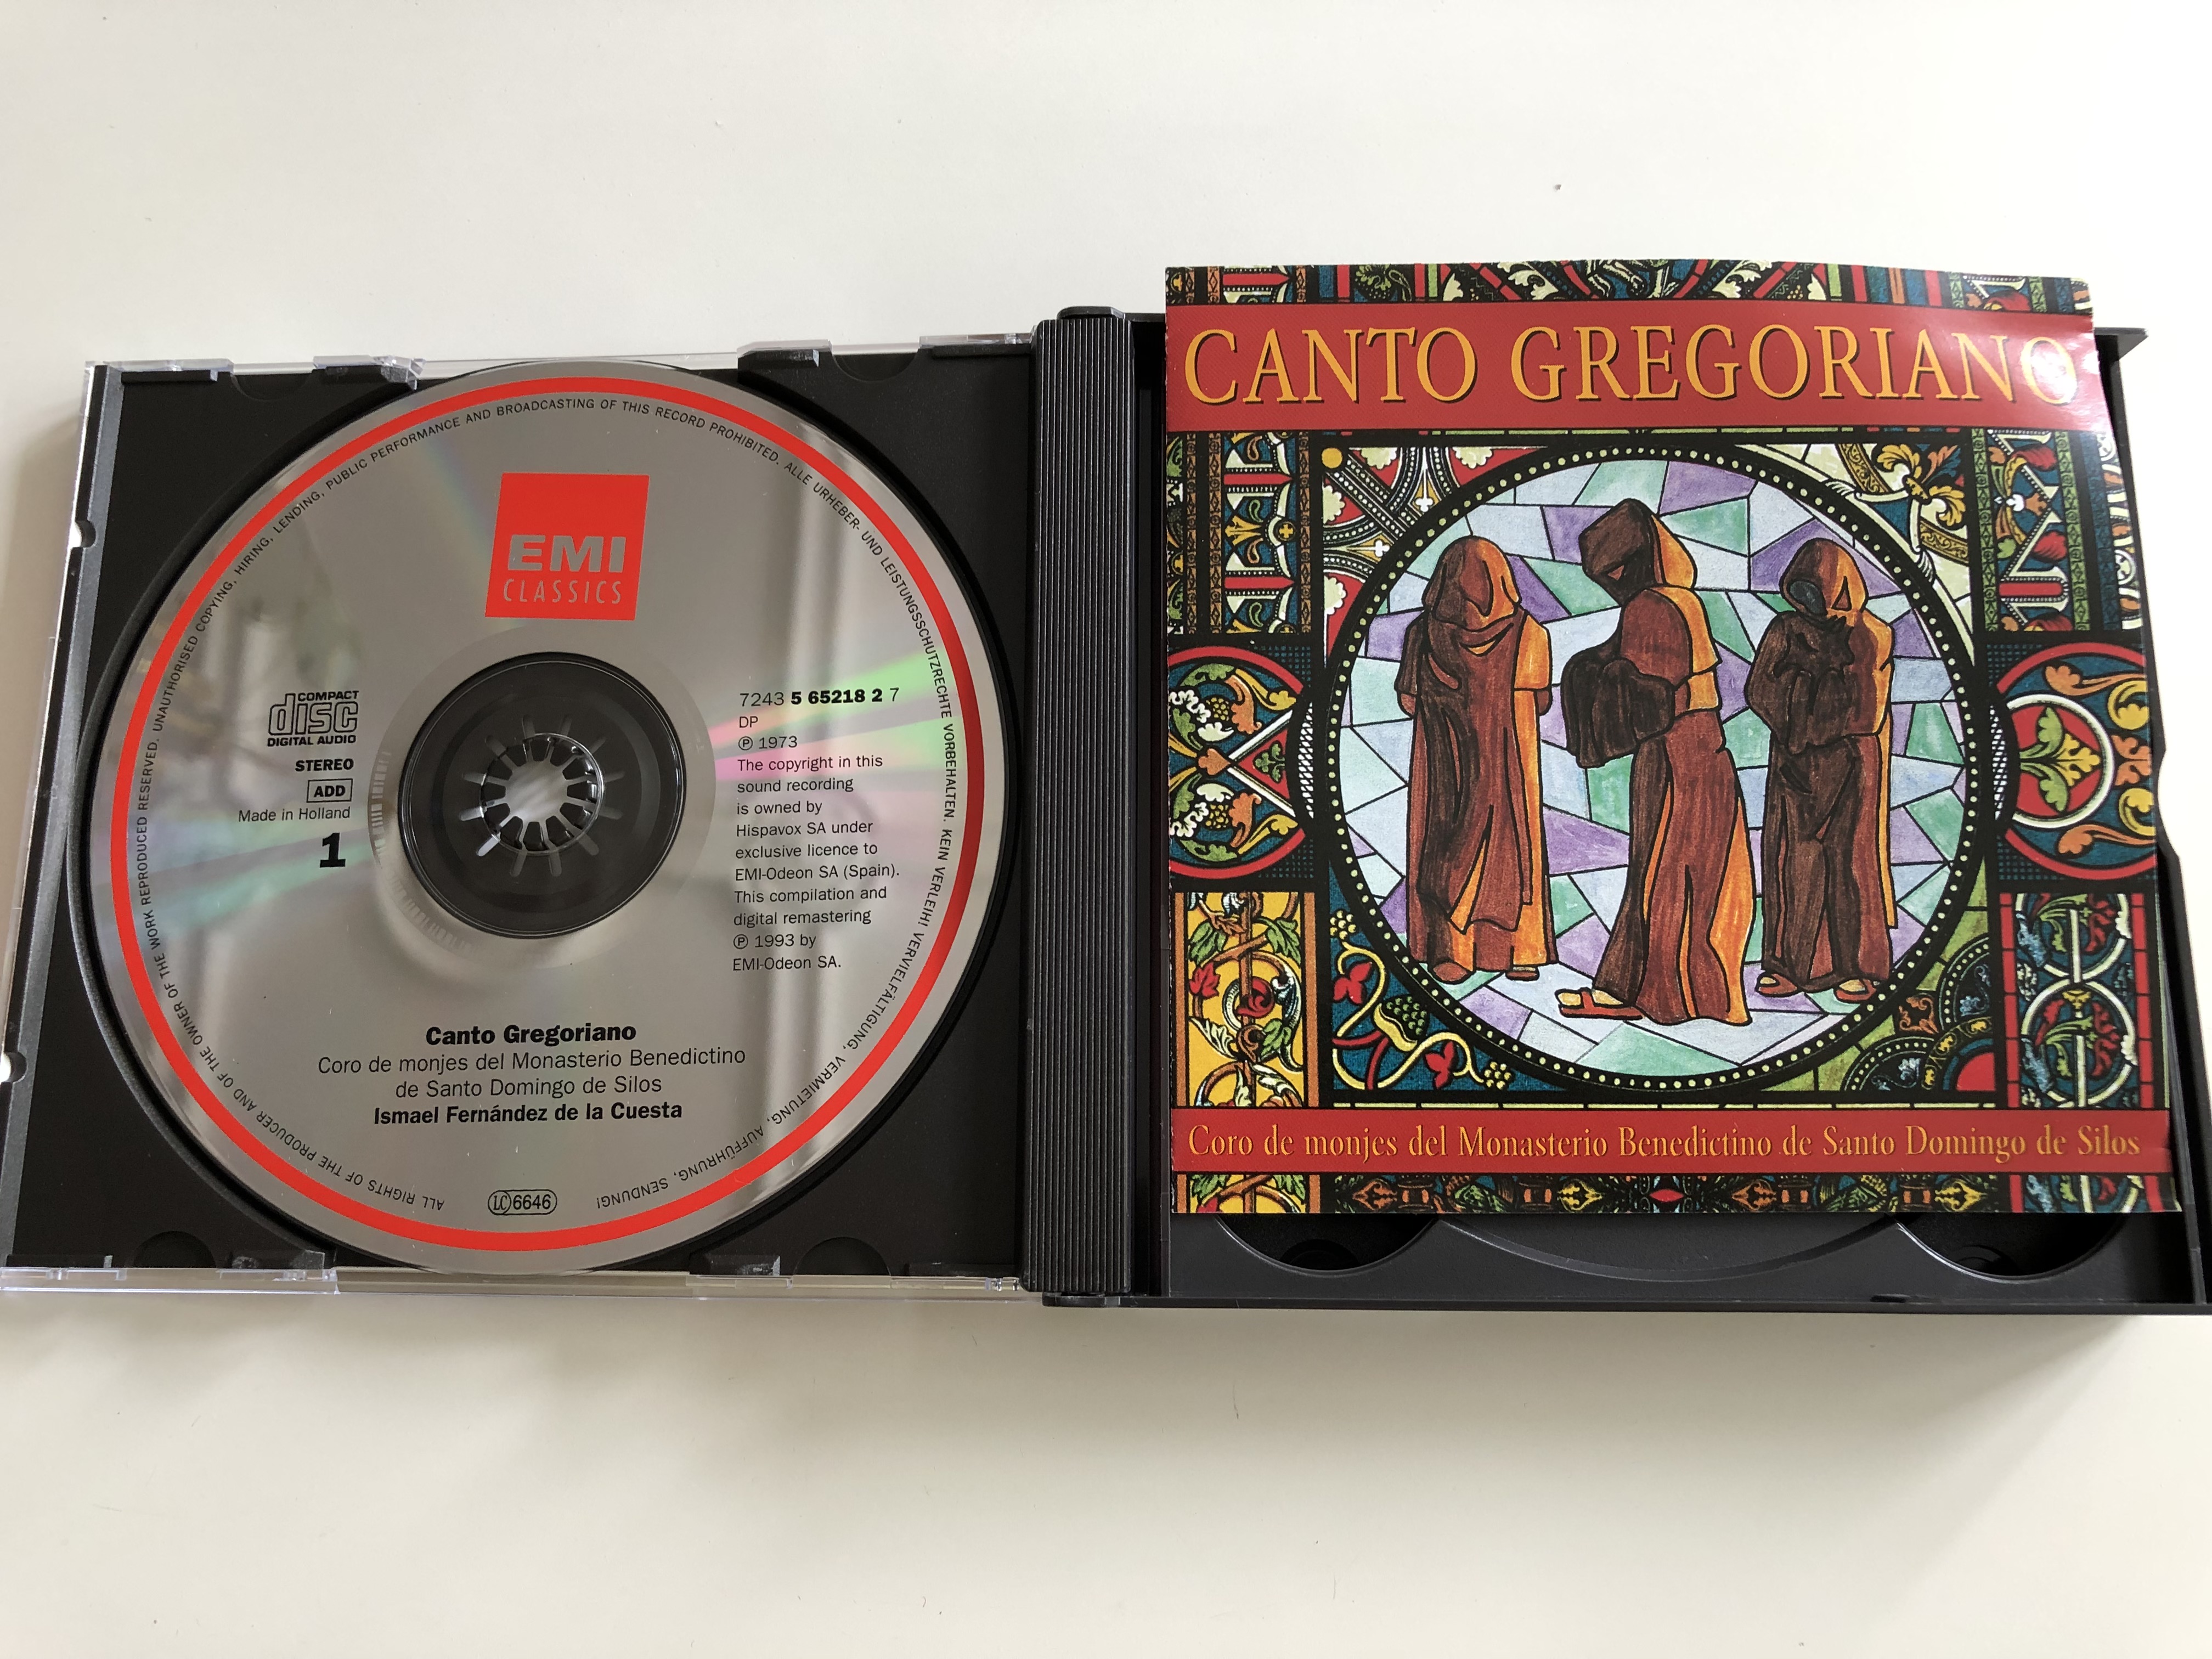 canto-gregoriano-coro-de-monjes-del-monasterio-benedictino-de-santo-domingo-de-silos-2x-audio-cd-1994-emi-classics-cms-5-65217-2-2-.jpg